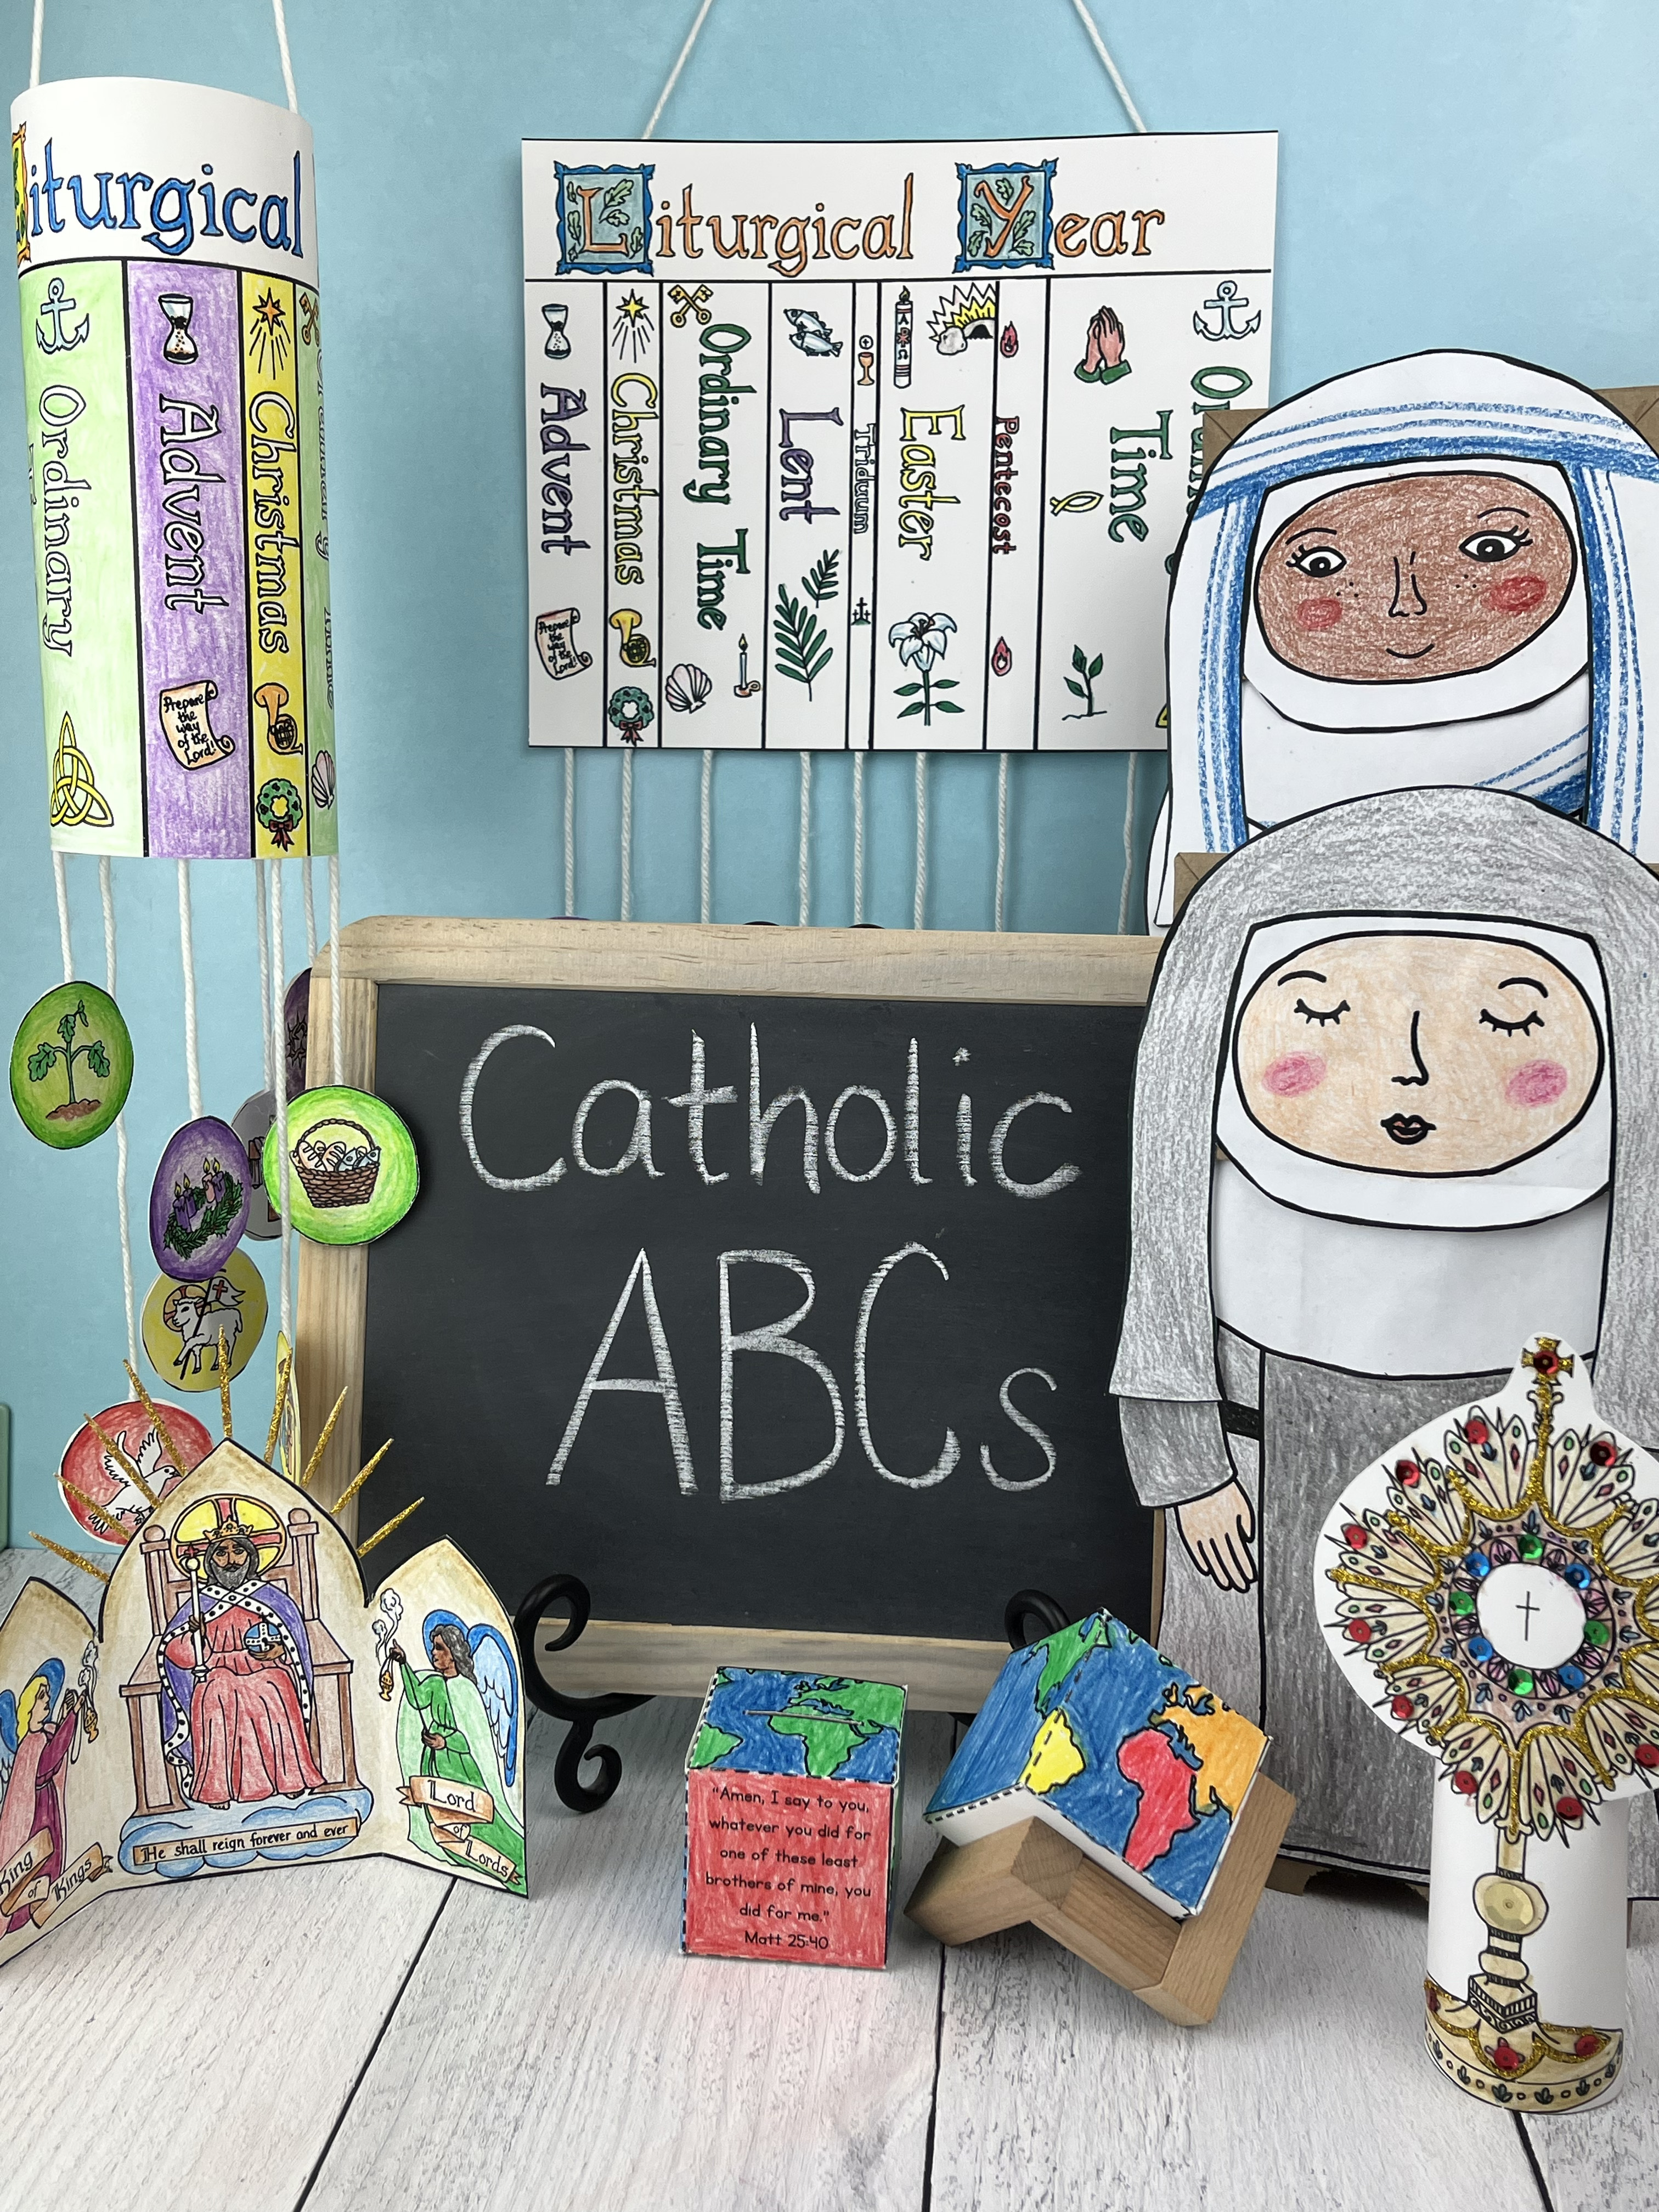 Catholic ABCs Course Example Materials